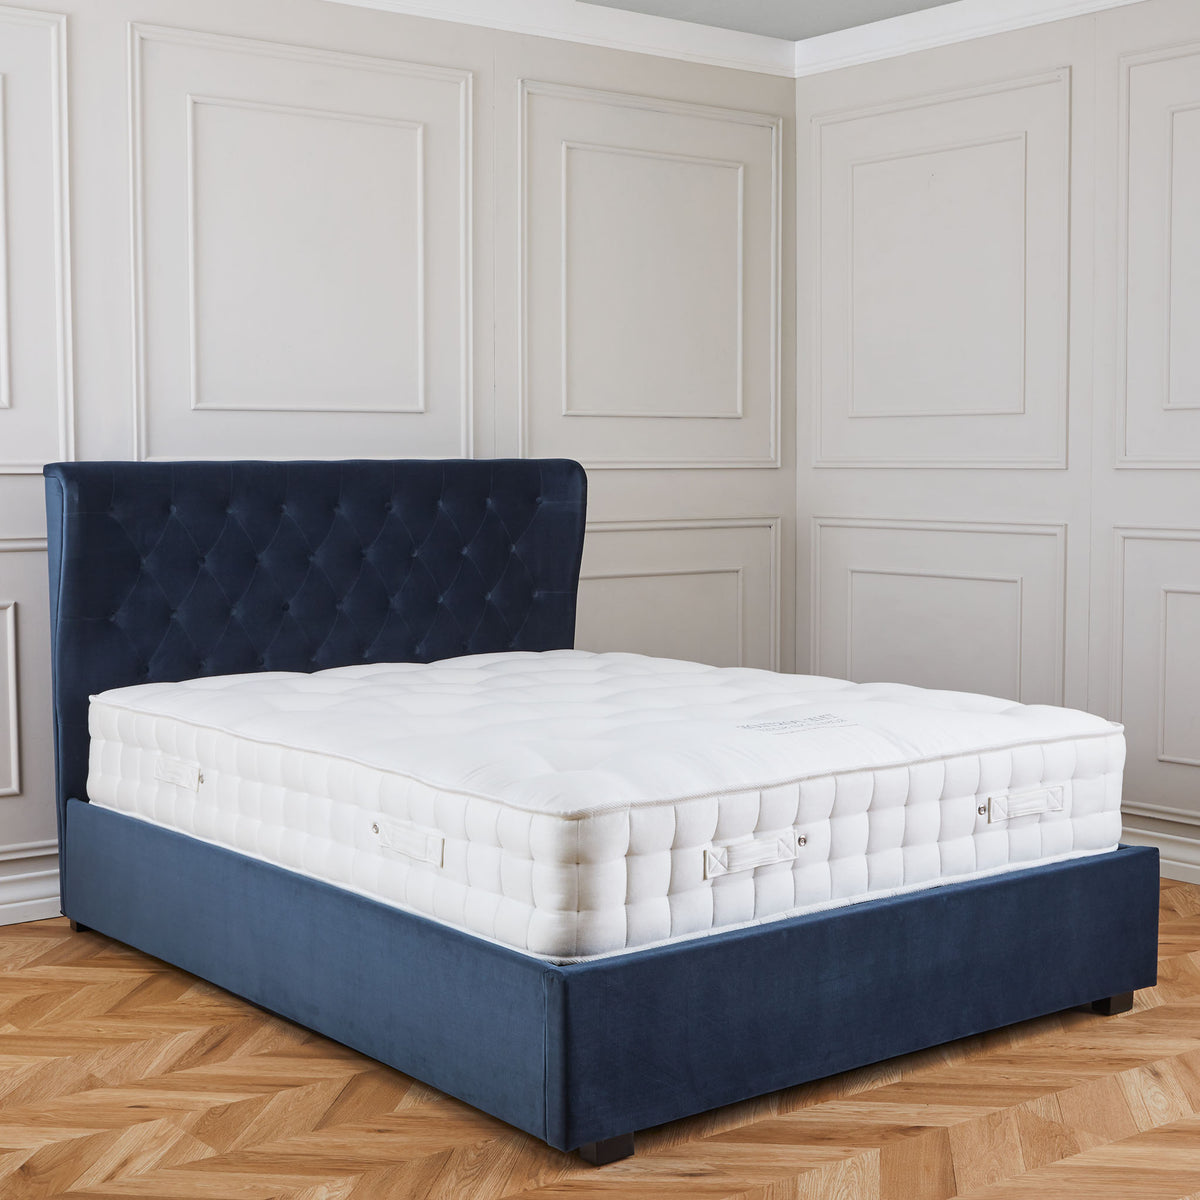 Richmond Ink blue Velvet Ottoman Storage Bed Frame from Roseland furniture